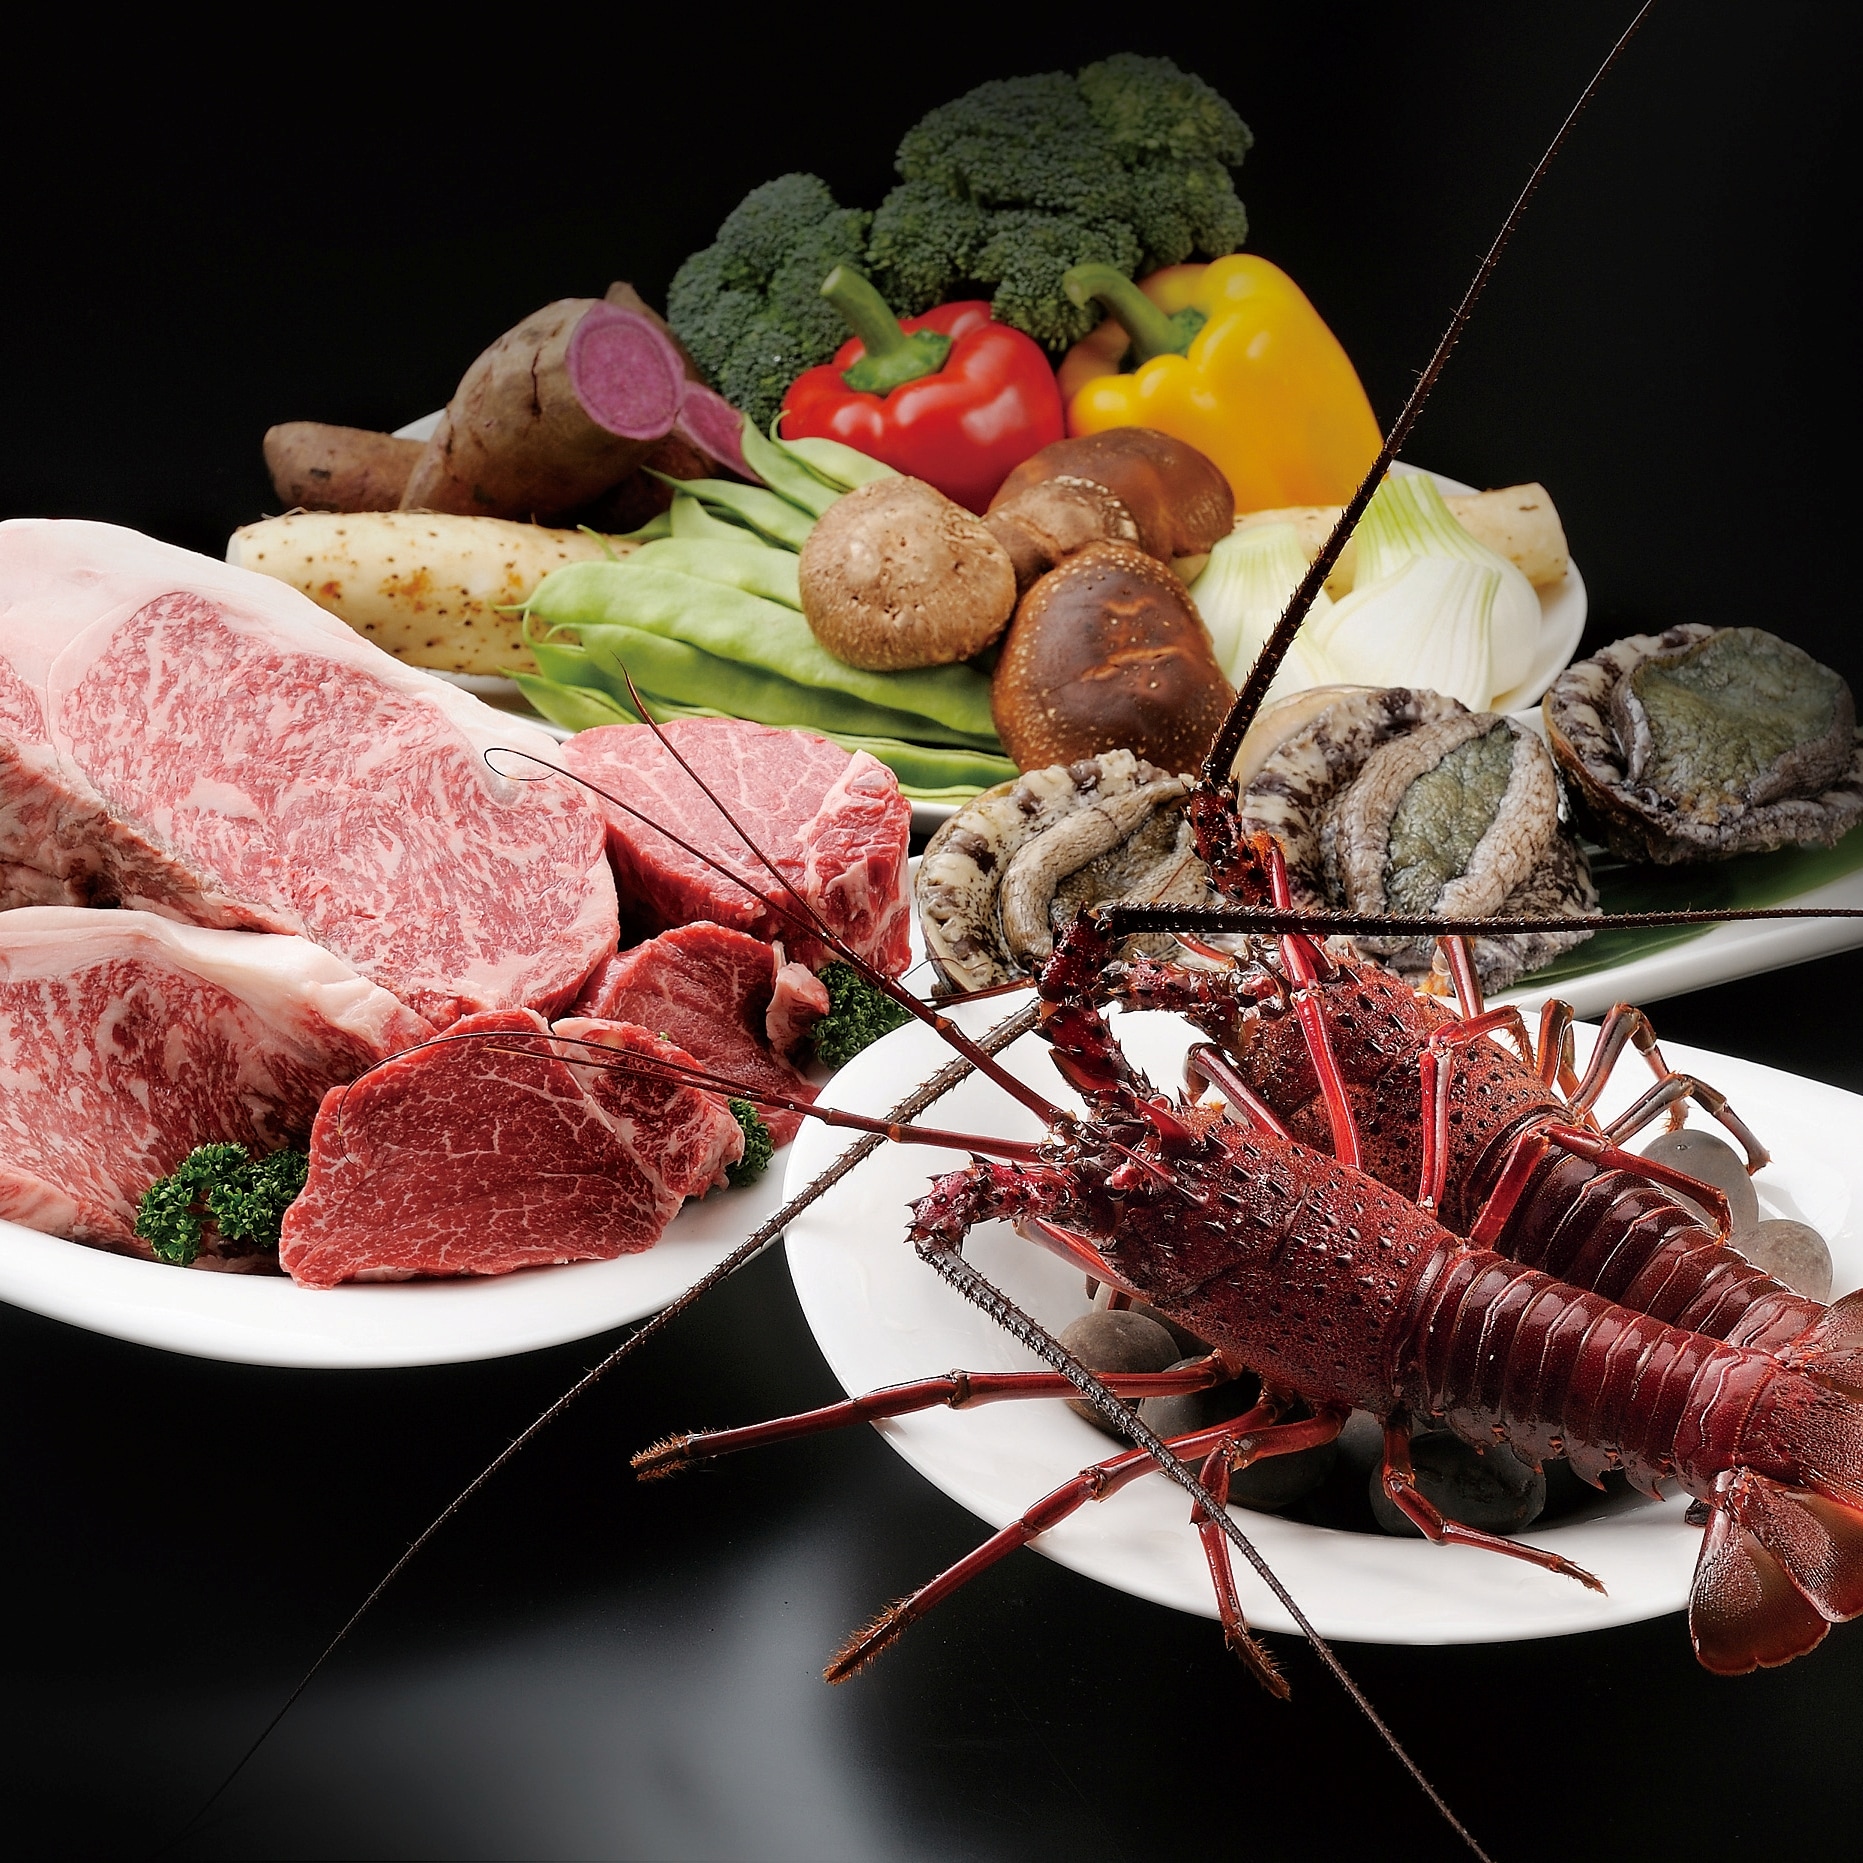 Gambar lobster berduri, abalon, daging sapi Matsusaka